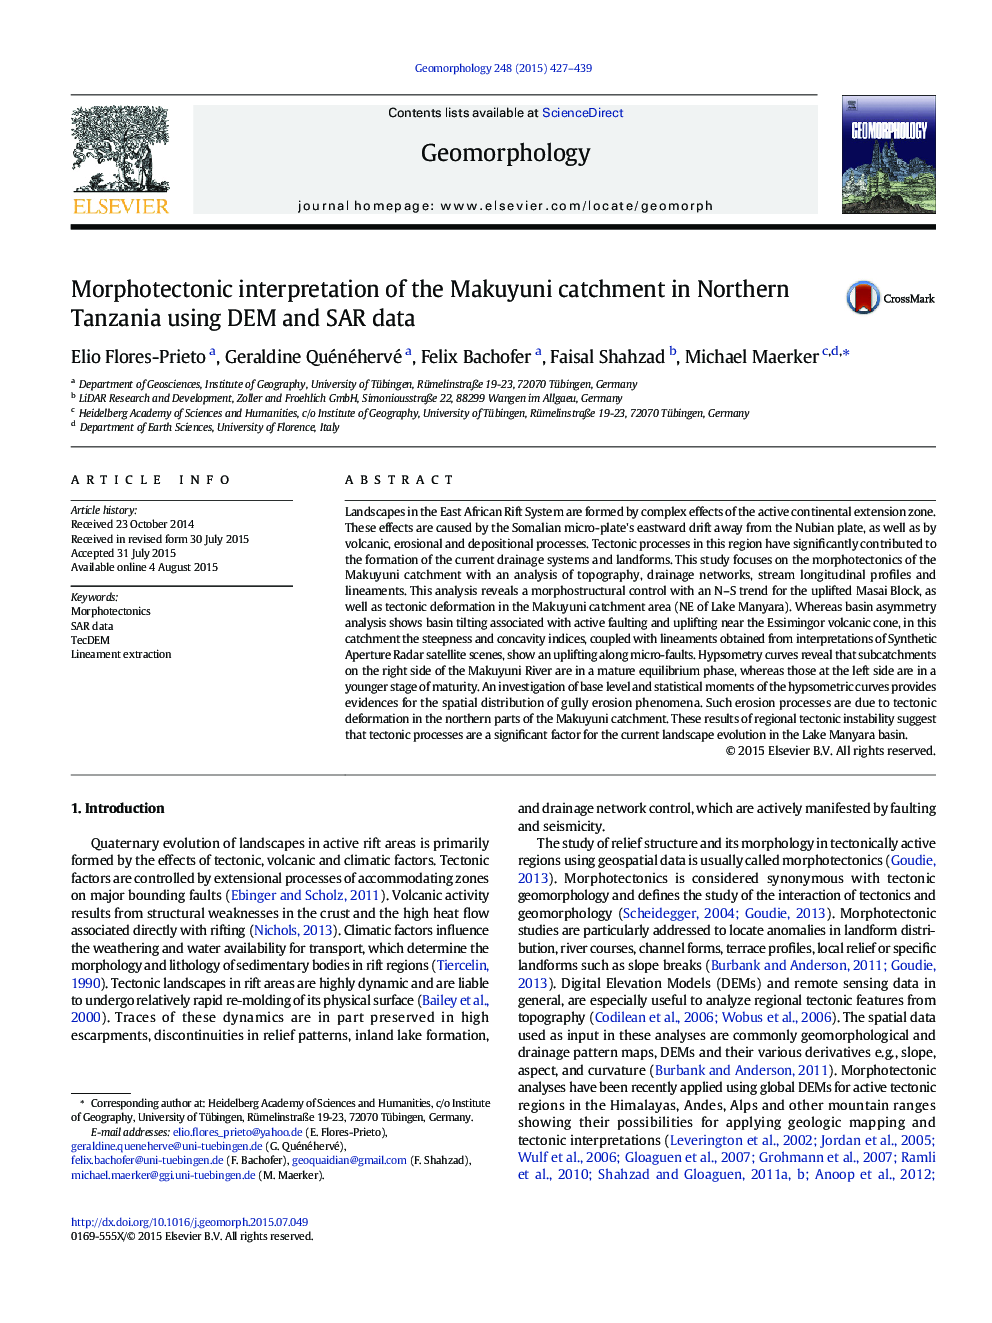 Morphotectonic interpretation of the Makuyuni catchment in Northern Tanzania using DEM and SAR data